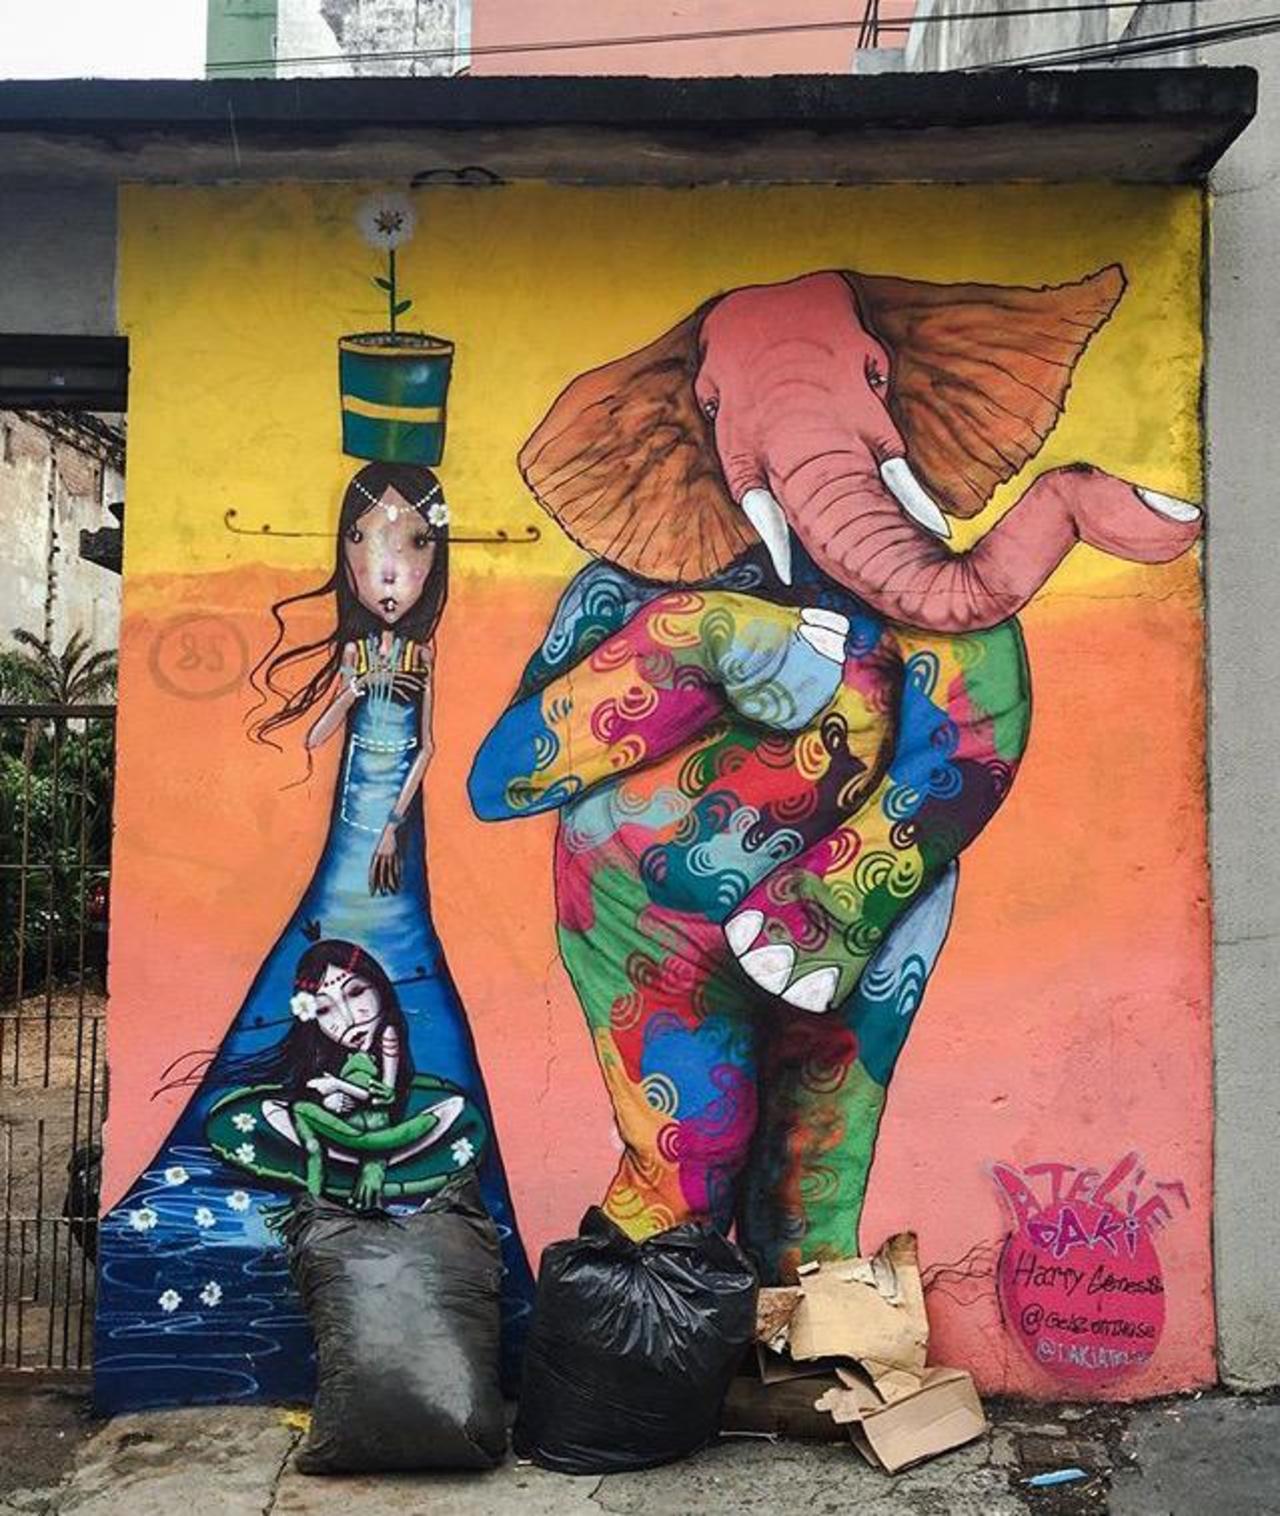 Street Art by Harry Geneis & Gelson in São Paulo #art #mural #graffiti #streetart http://t.co/SlLbhuMZfD … … …… … http://twitter.com/charlesjackso14/status/648018022544842752